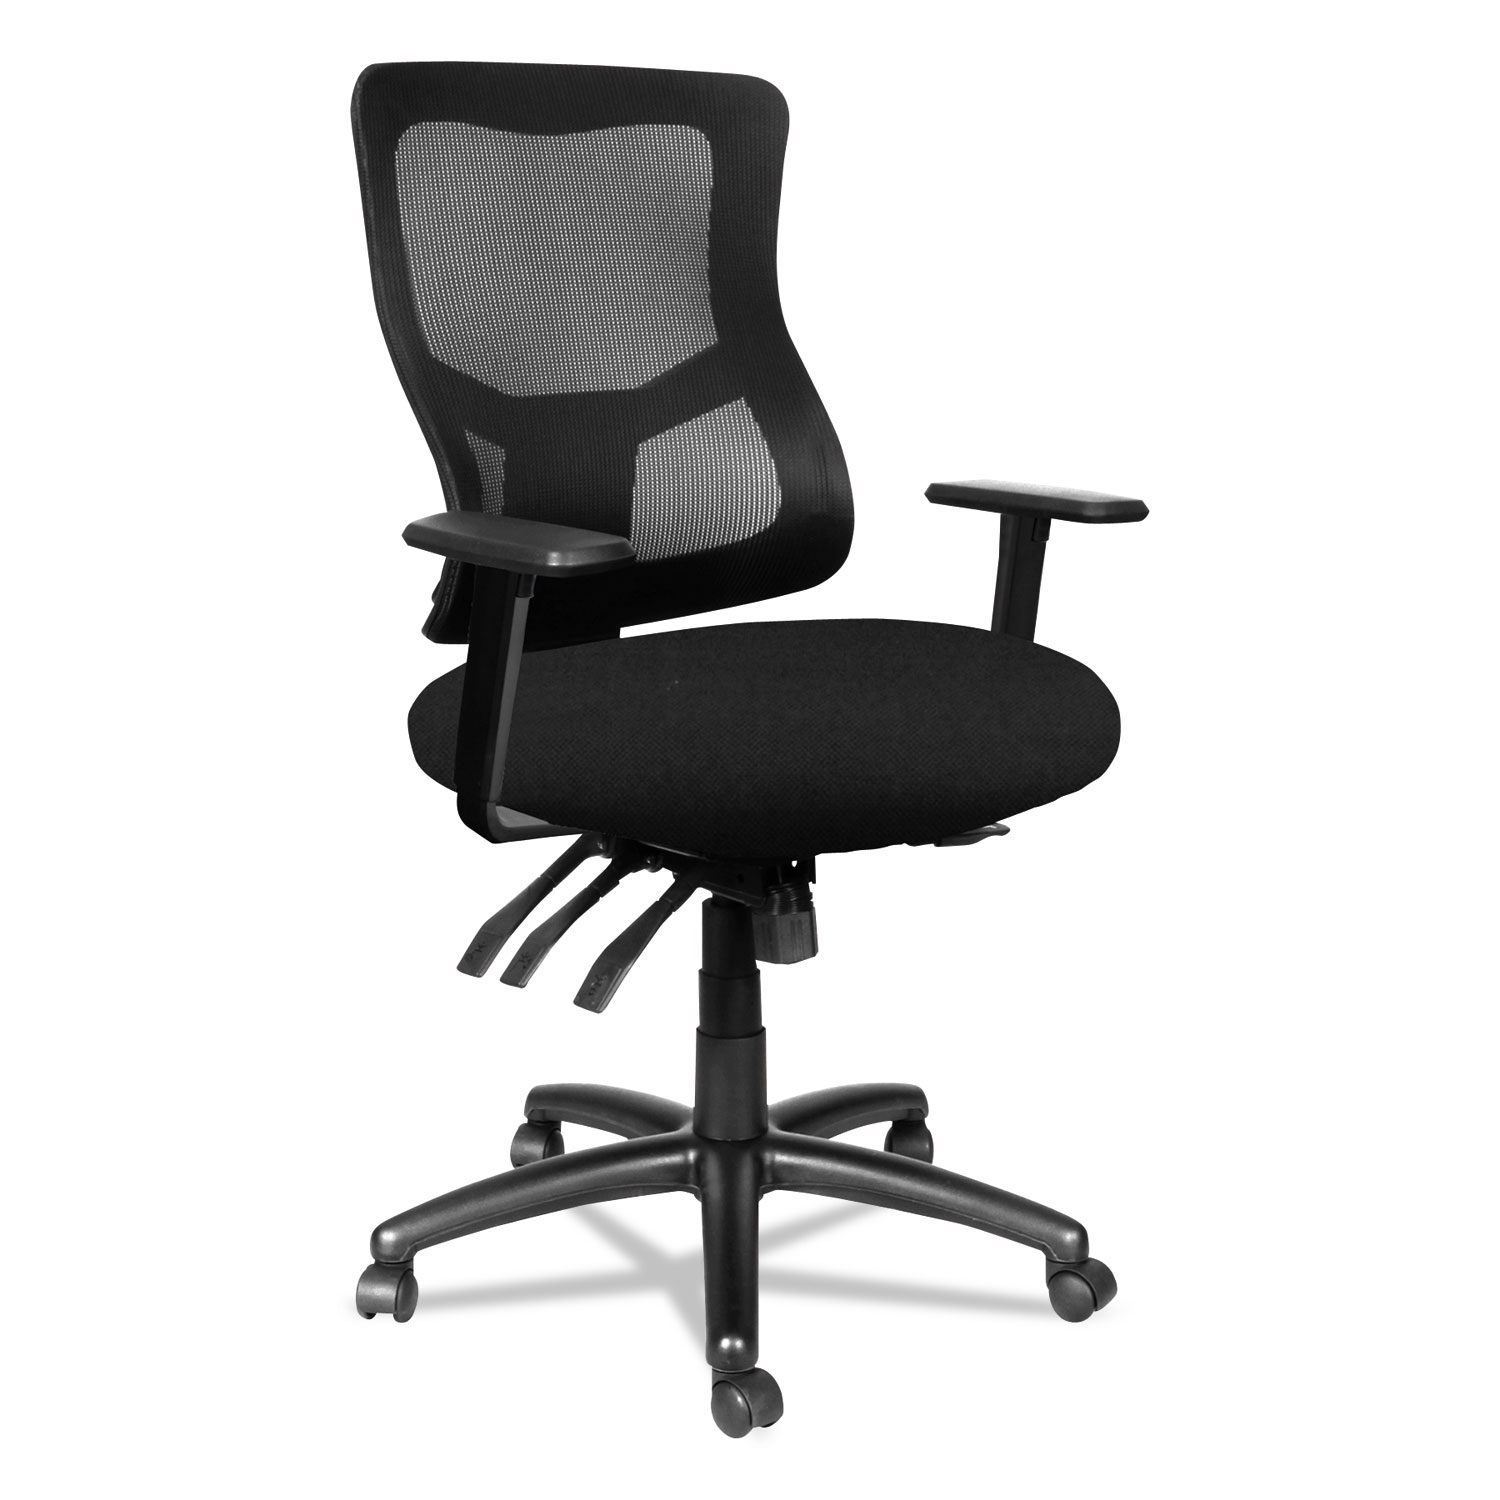  Alera ALEELT4214M Alera Elusion II Series Mesh Mid-Back Multi-Function with Seat Slide Chair, Supports up to 275 lbs, Black Seat/Back/Base (ALEELT4214M) 